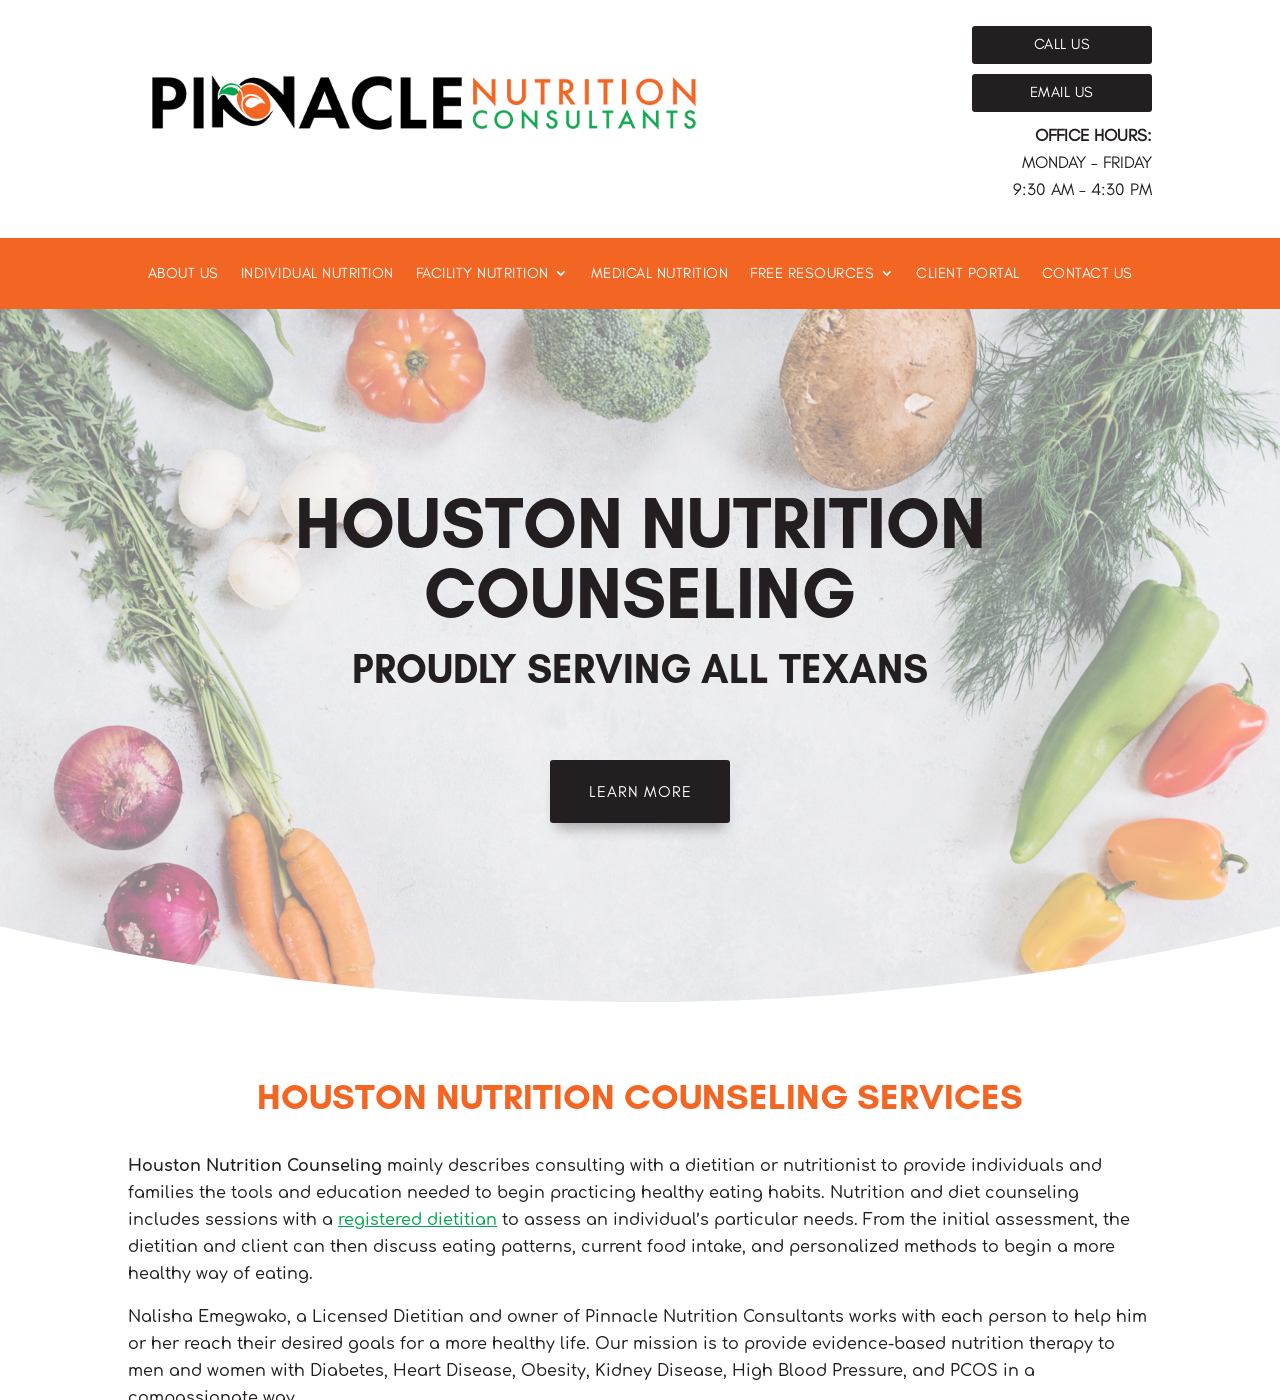 Birmingham Website Design Agency - C Kinion Design - Pinnacle Nutrition Consultants - Half Page